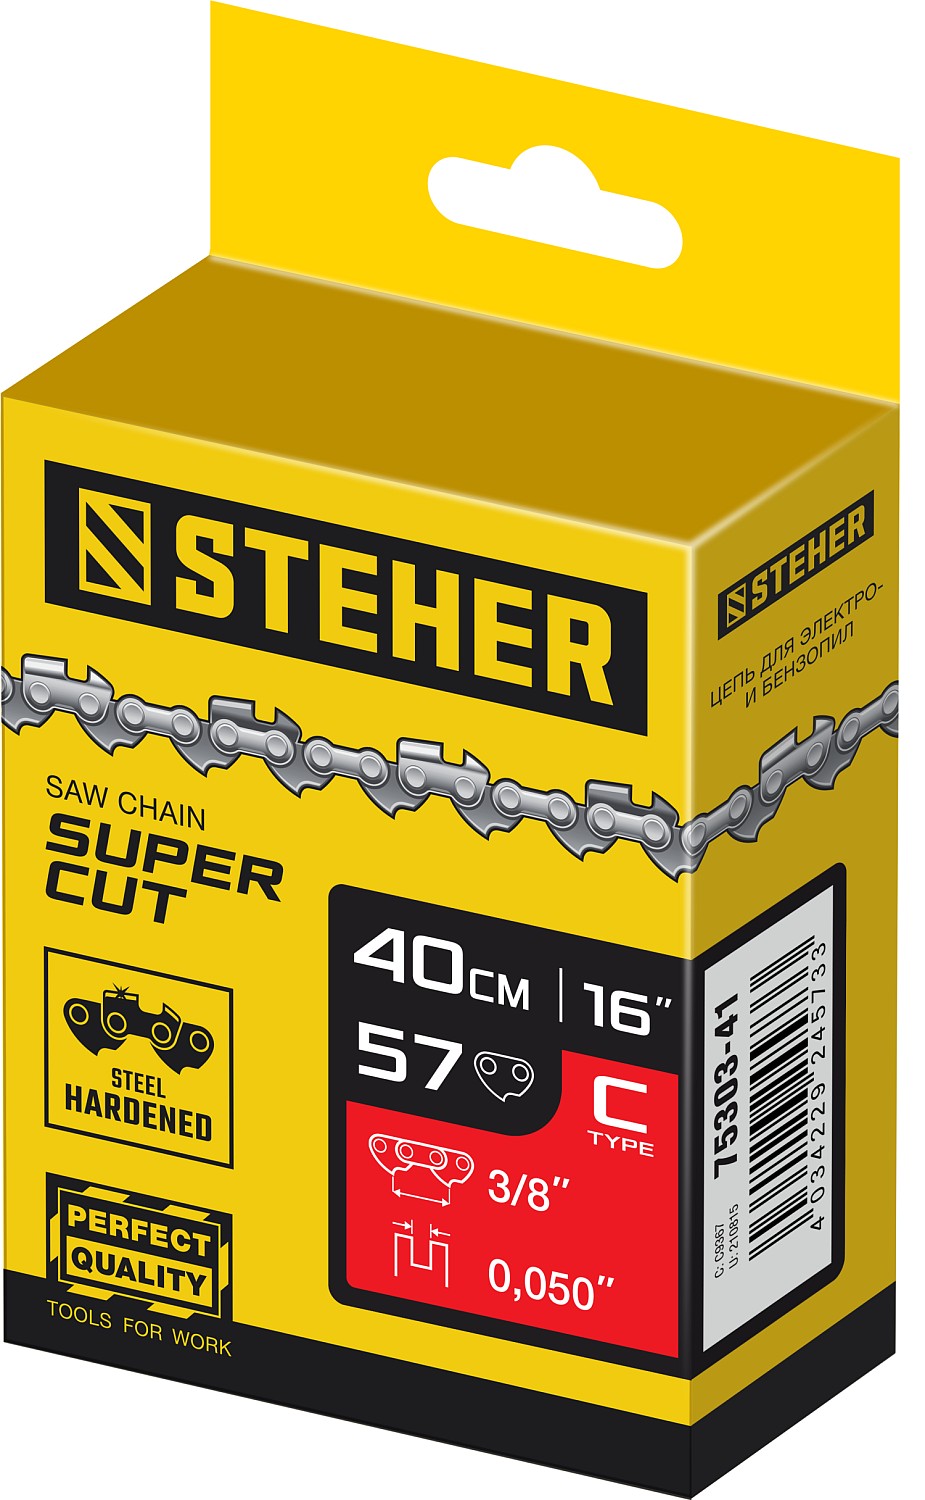 STEHER type C, шаг 3/8″, паз 1.3 мм, 57 звеньев, цепь для электропил (75303-41)